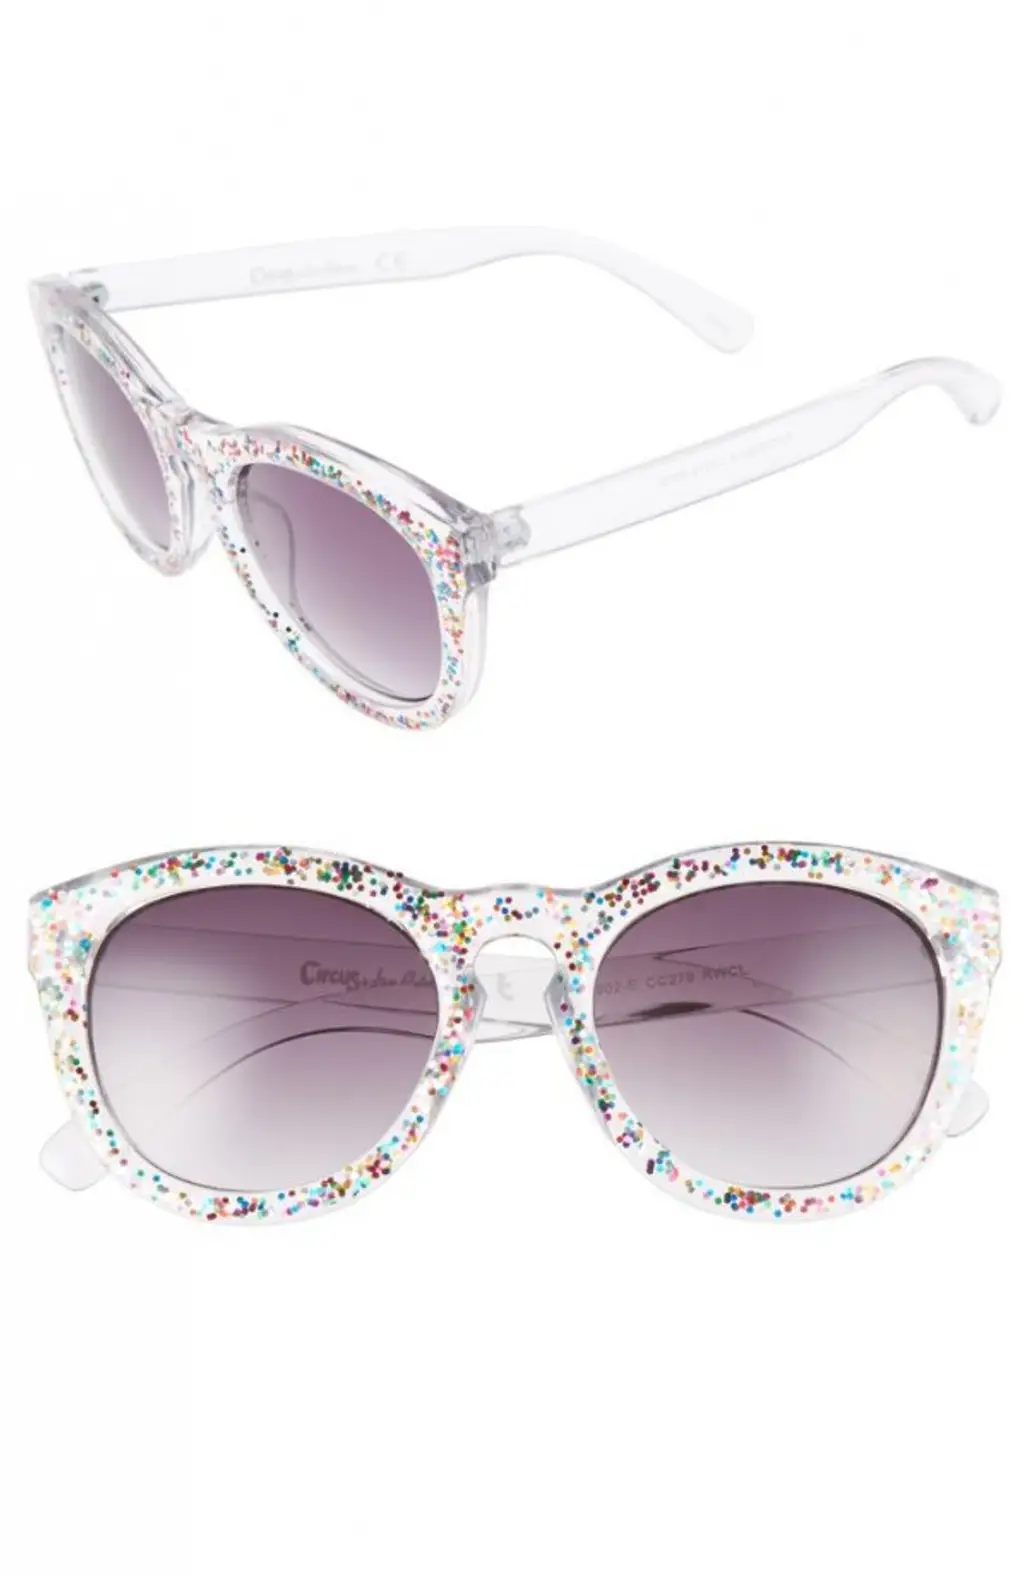 eyewear, sunglasses, glasses, vision care, fashion accessory,